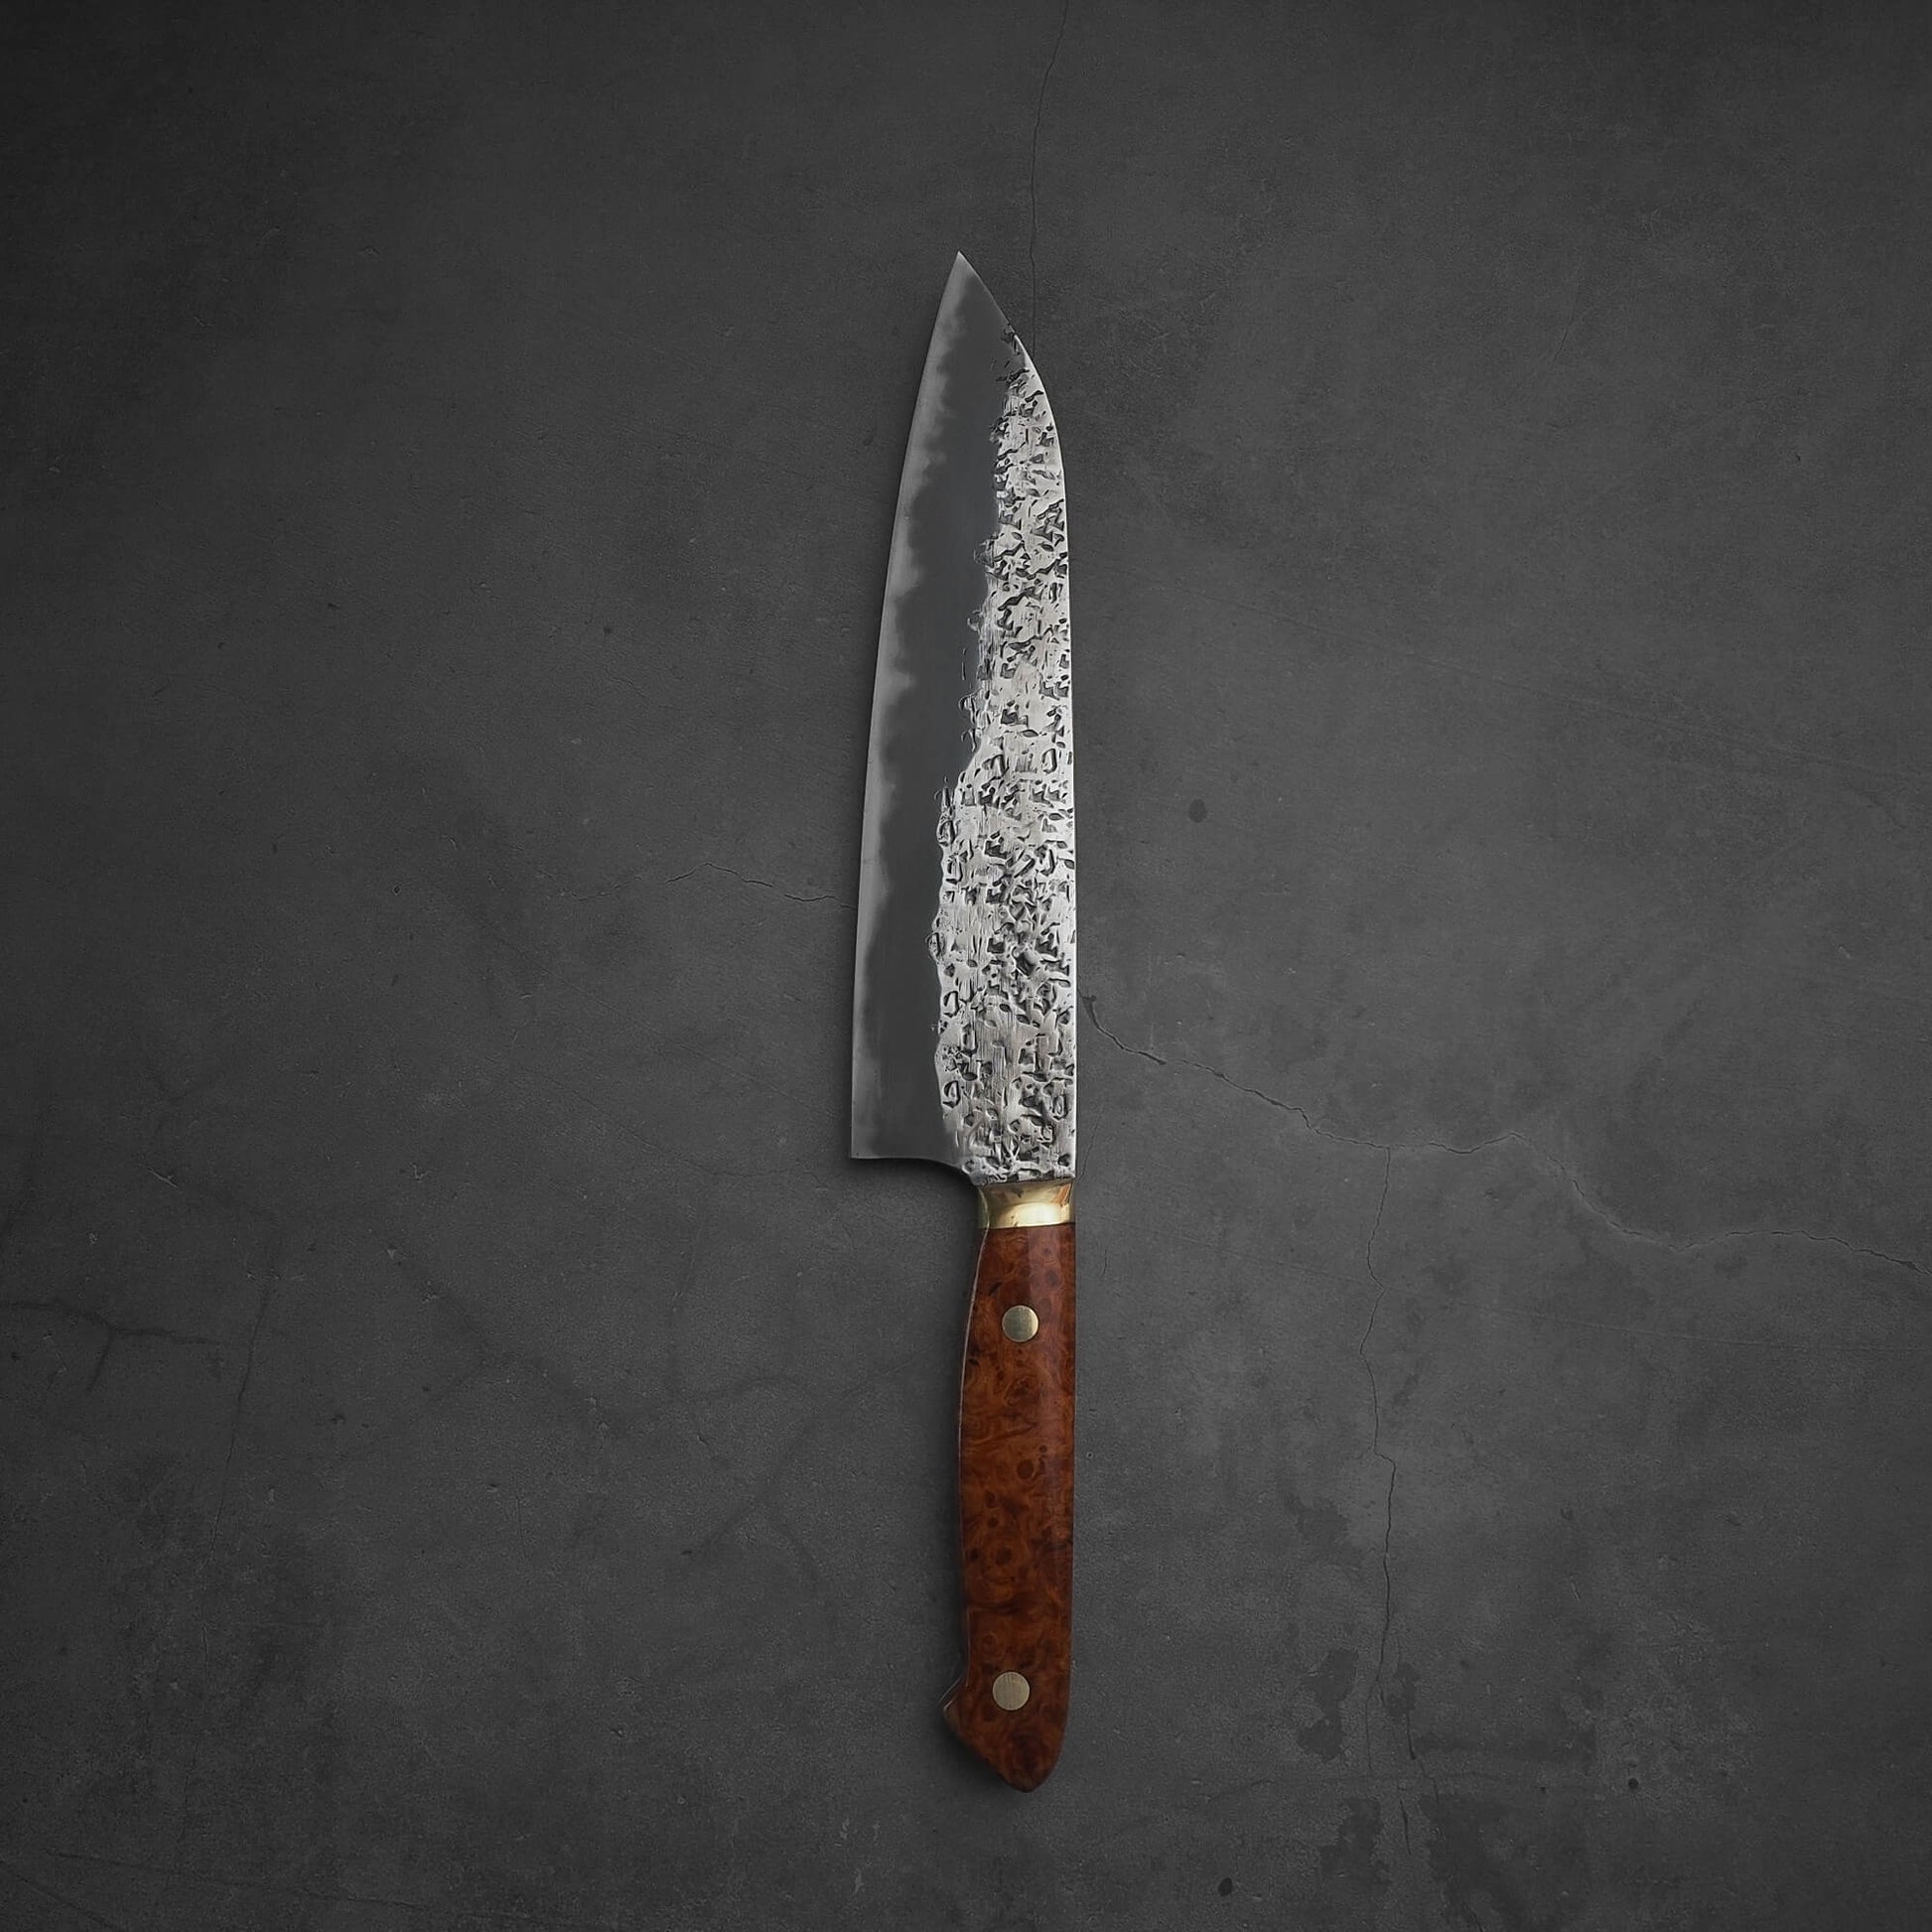 Top view of 220mm Kisuke Manaka tsuchime honwarikomi shirogami#2 gyuto knife showing the other side of the knife